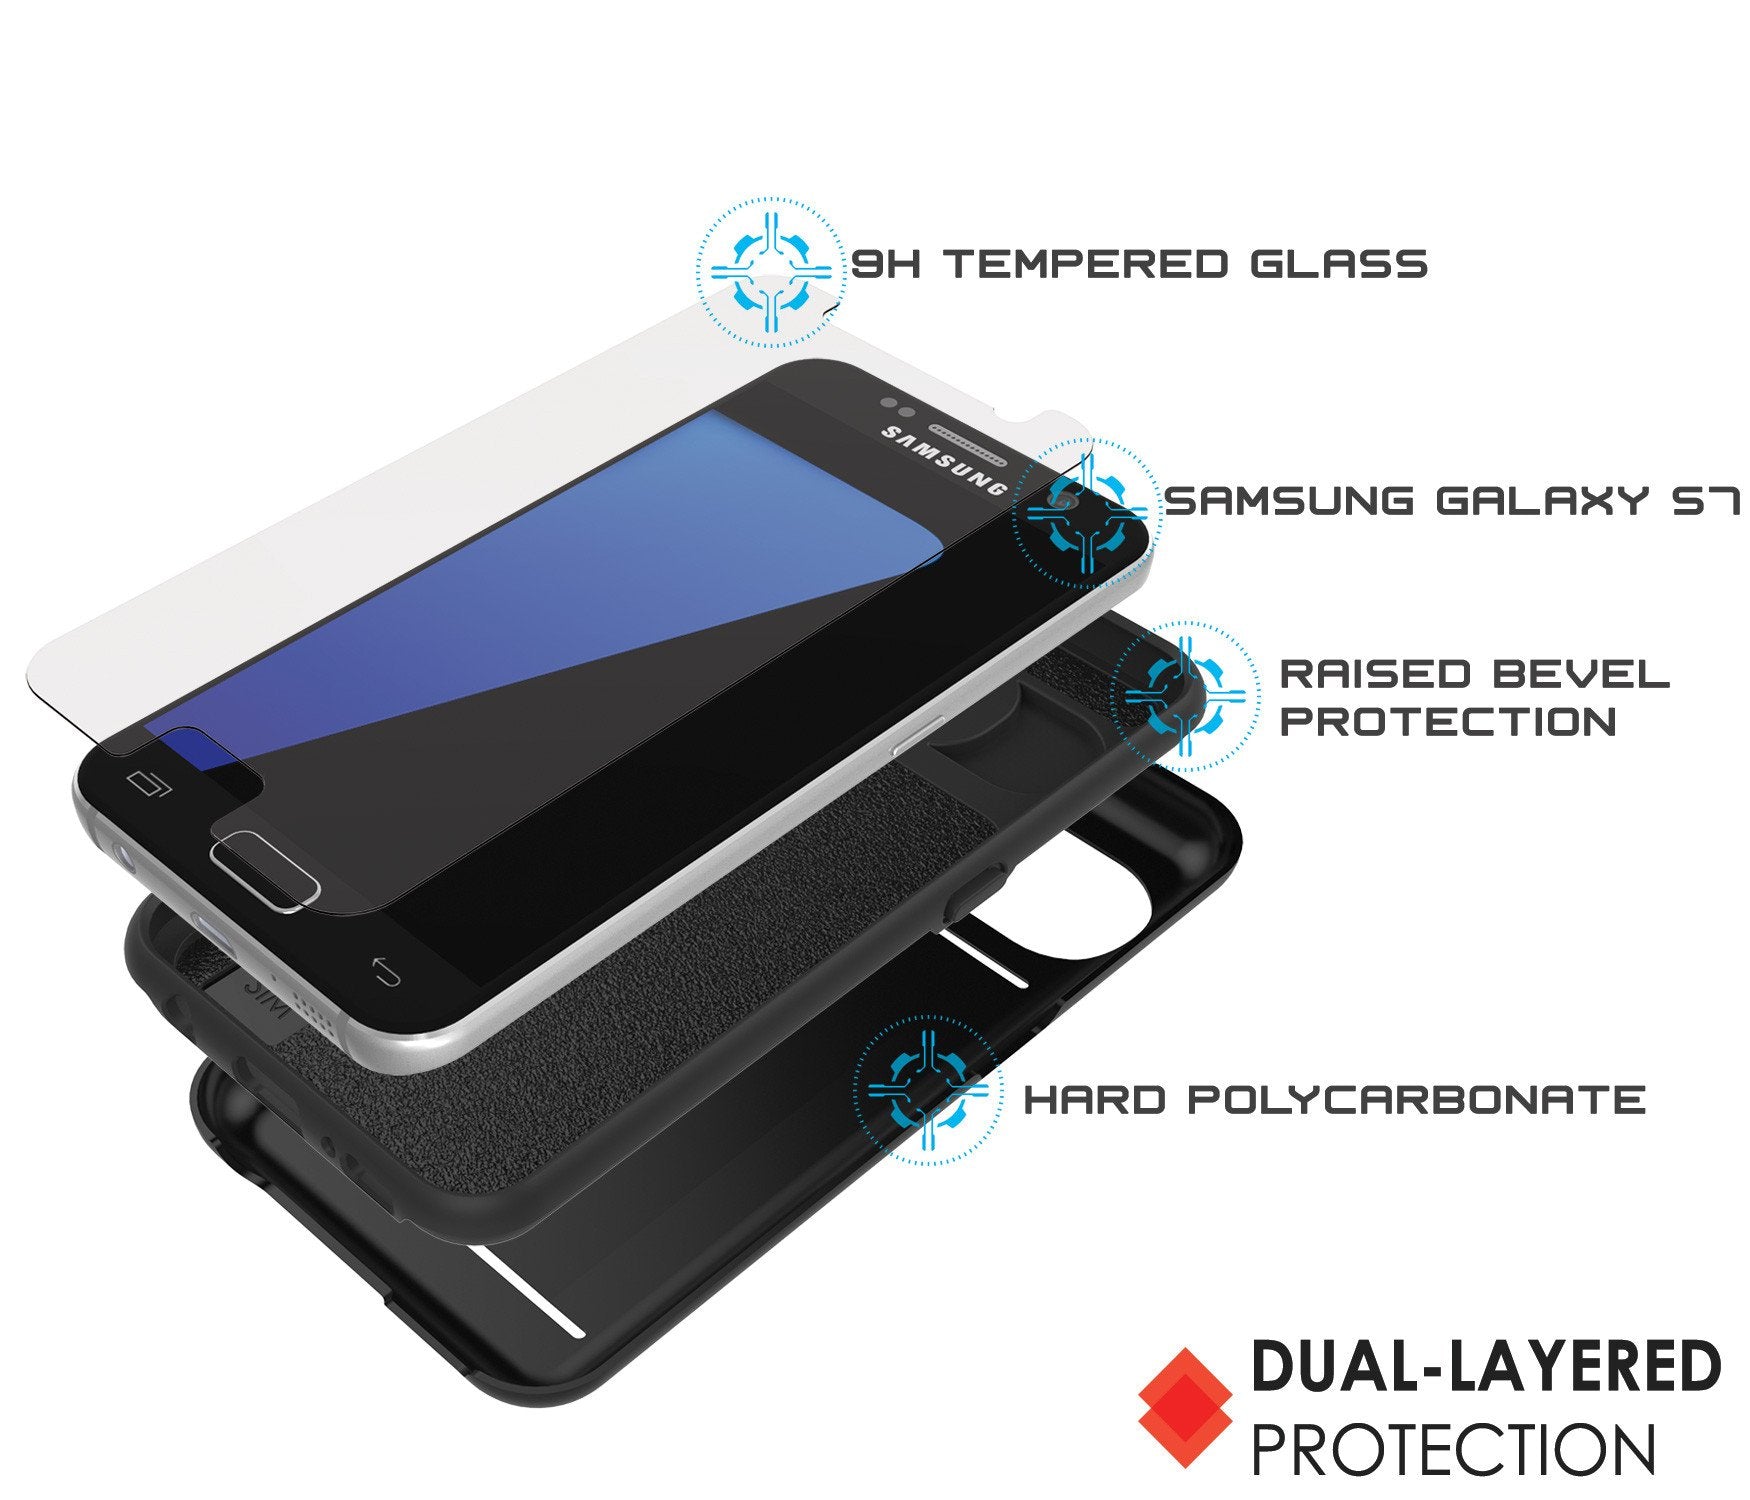 Galaxy s7 Case PunkCase CLUTCH Black Series Slim Armor Soft Cover Case w/ Tempered Glass - PunkCase NZ